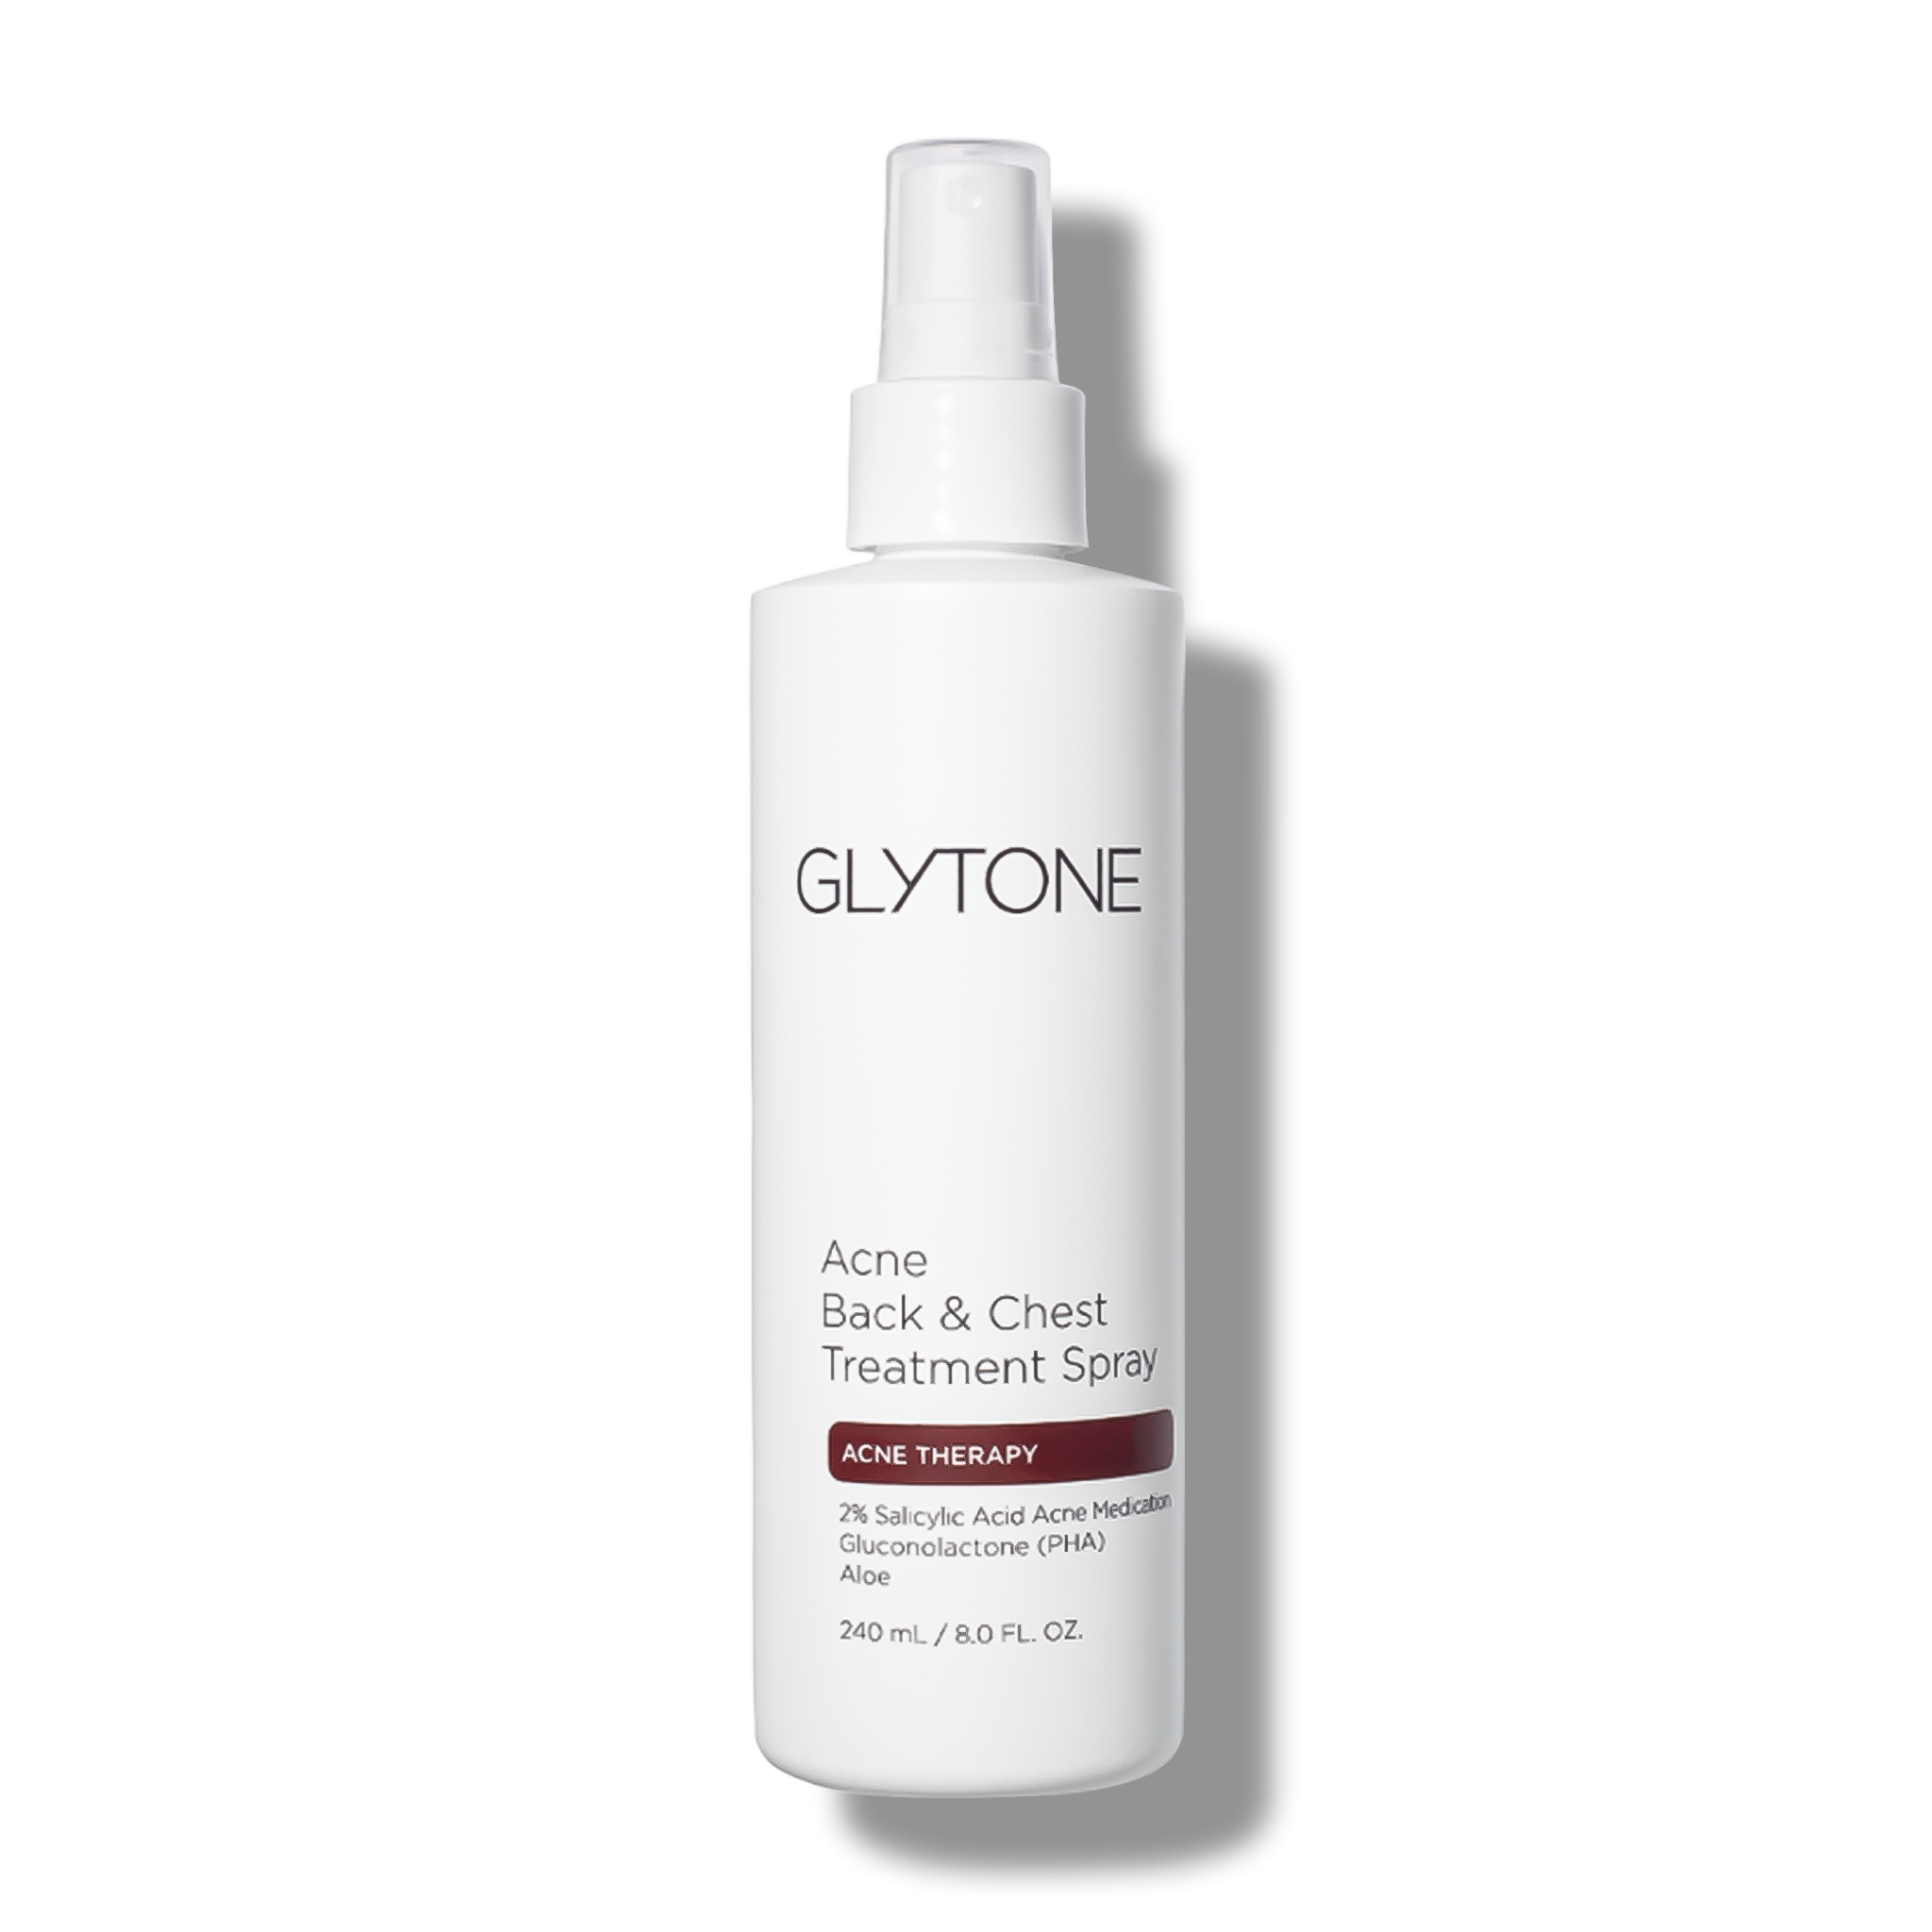 Glytone Acne Back & Chest Treatment Spray